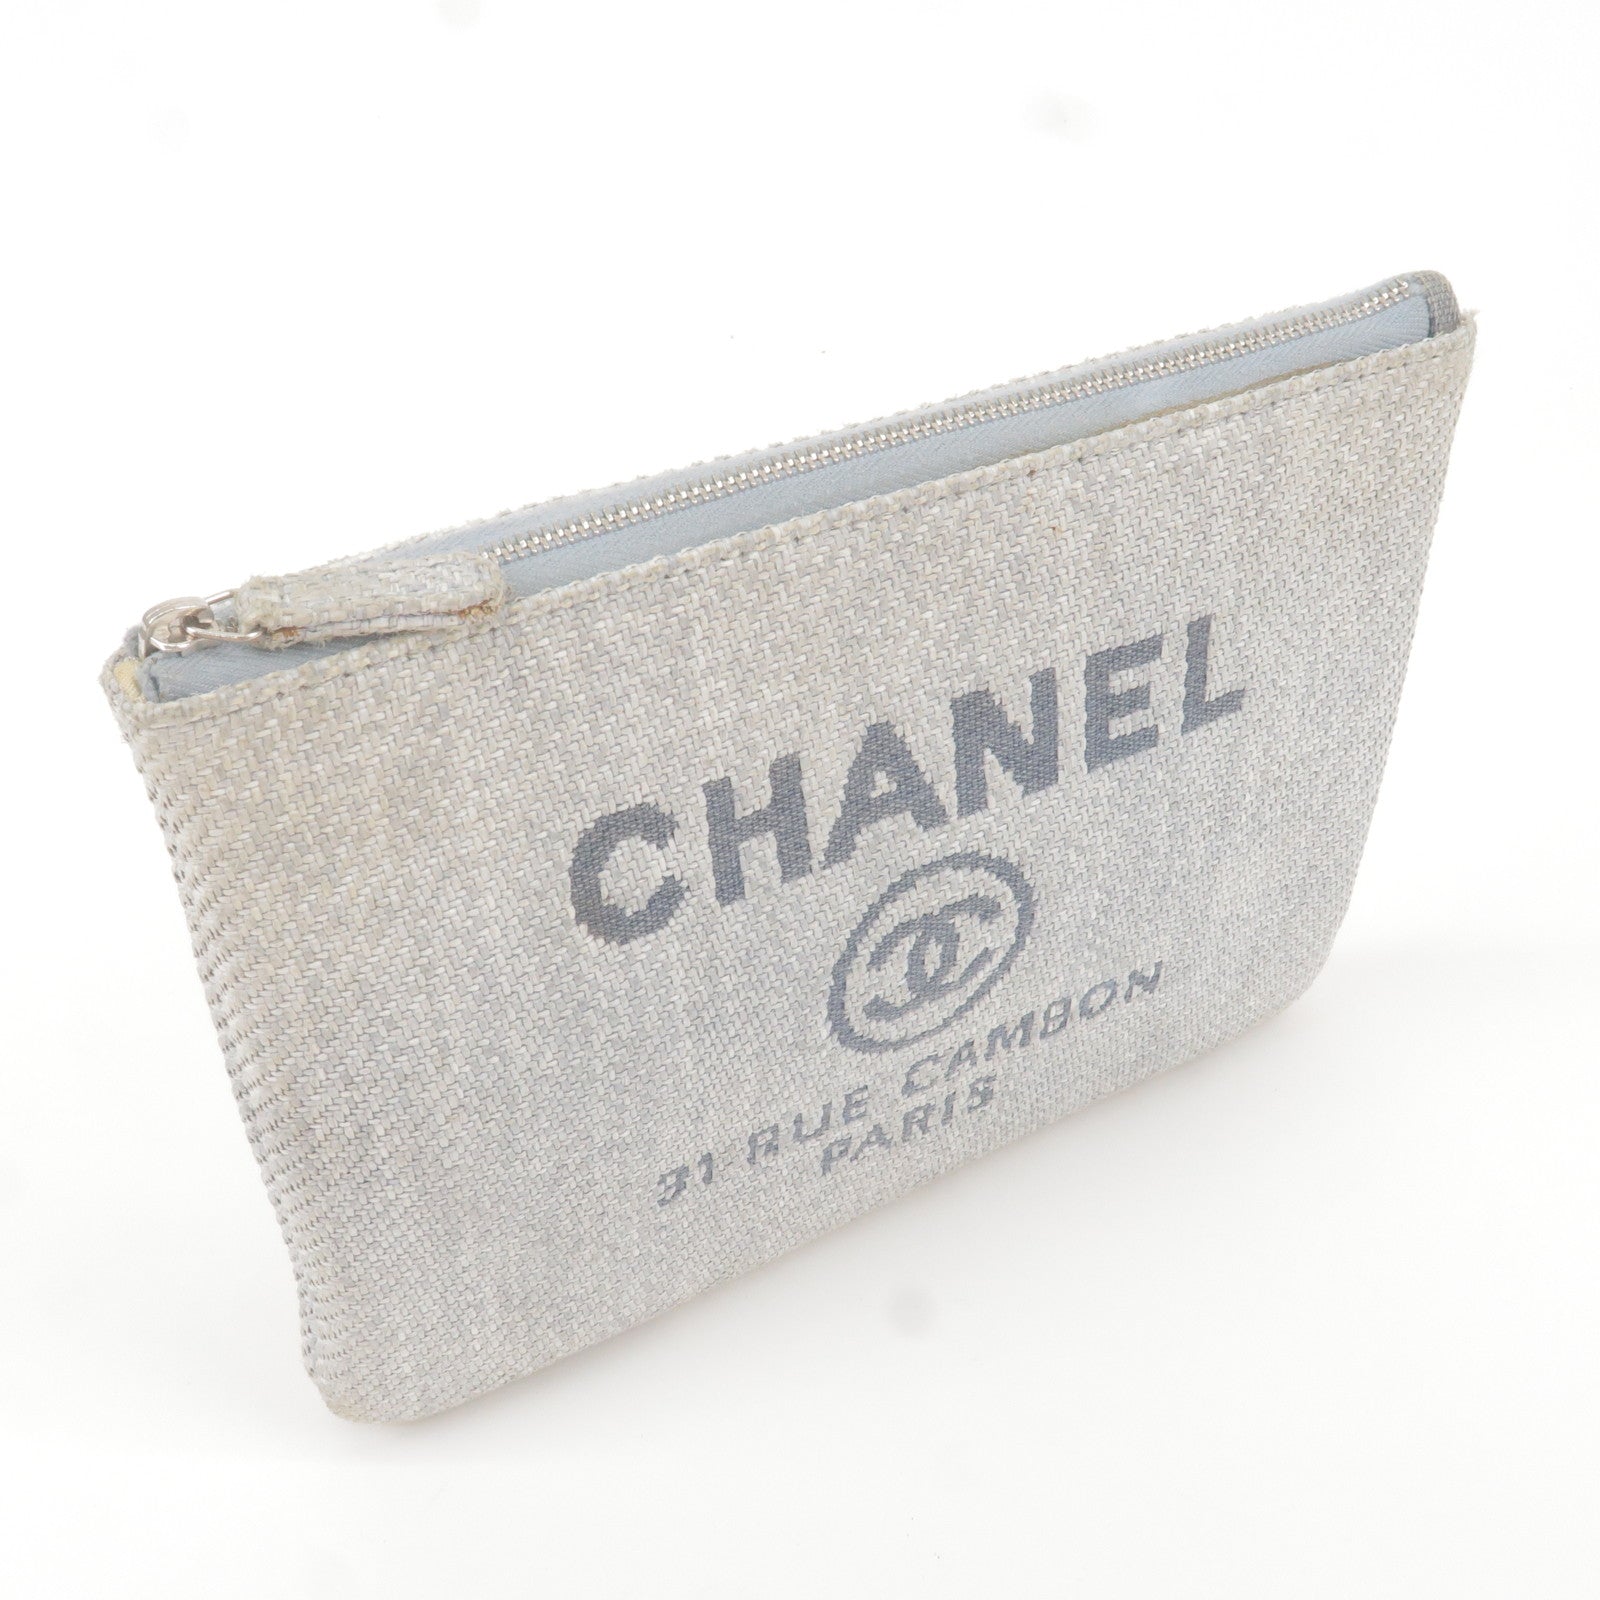 Chanel 2 way bag - Gem